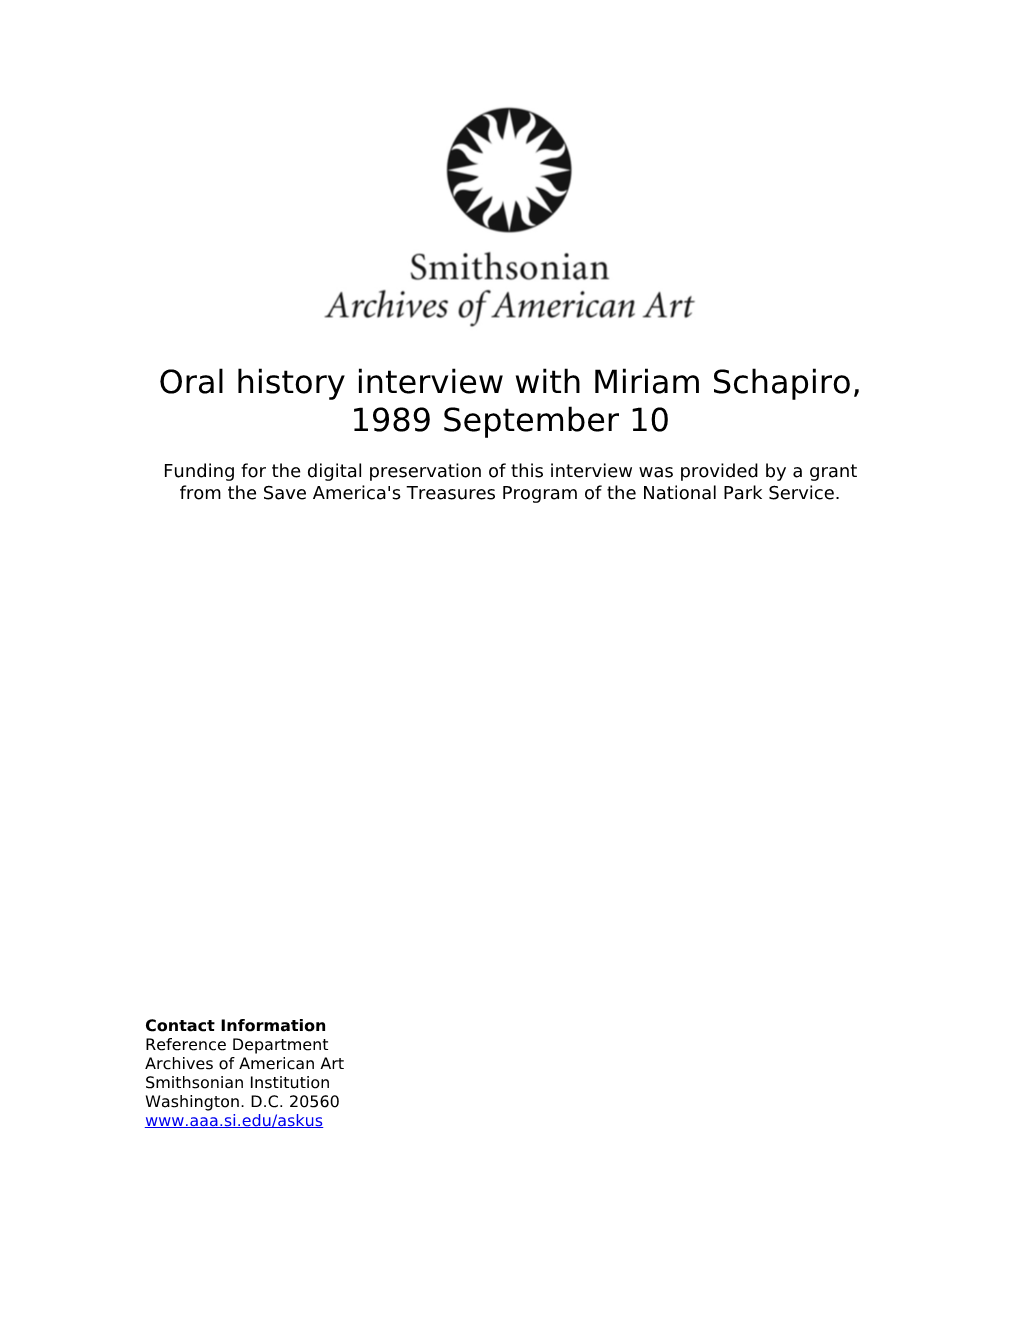 Oral History Interview with Miriam Schapiro, 1989 September 10